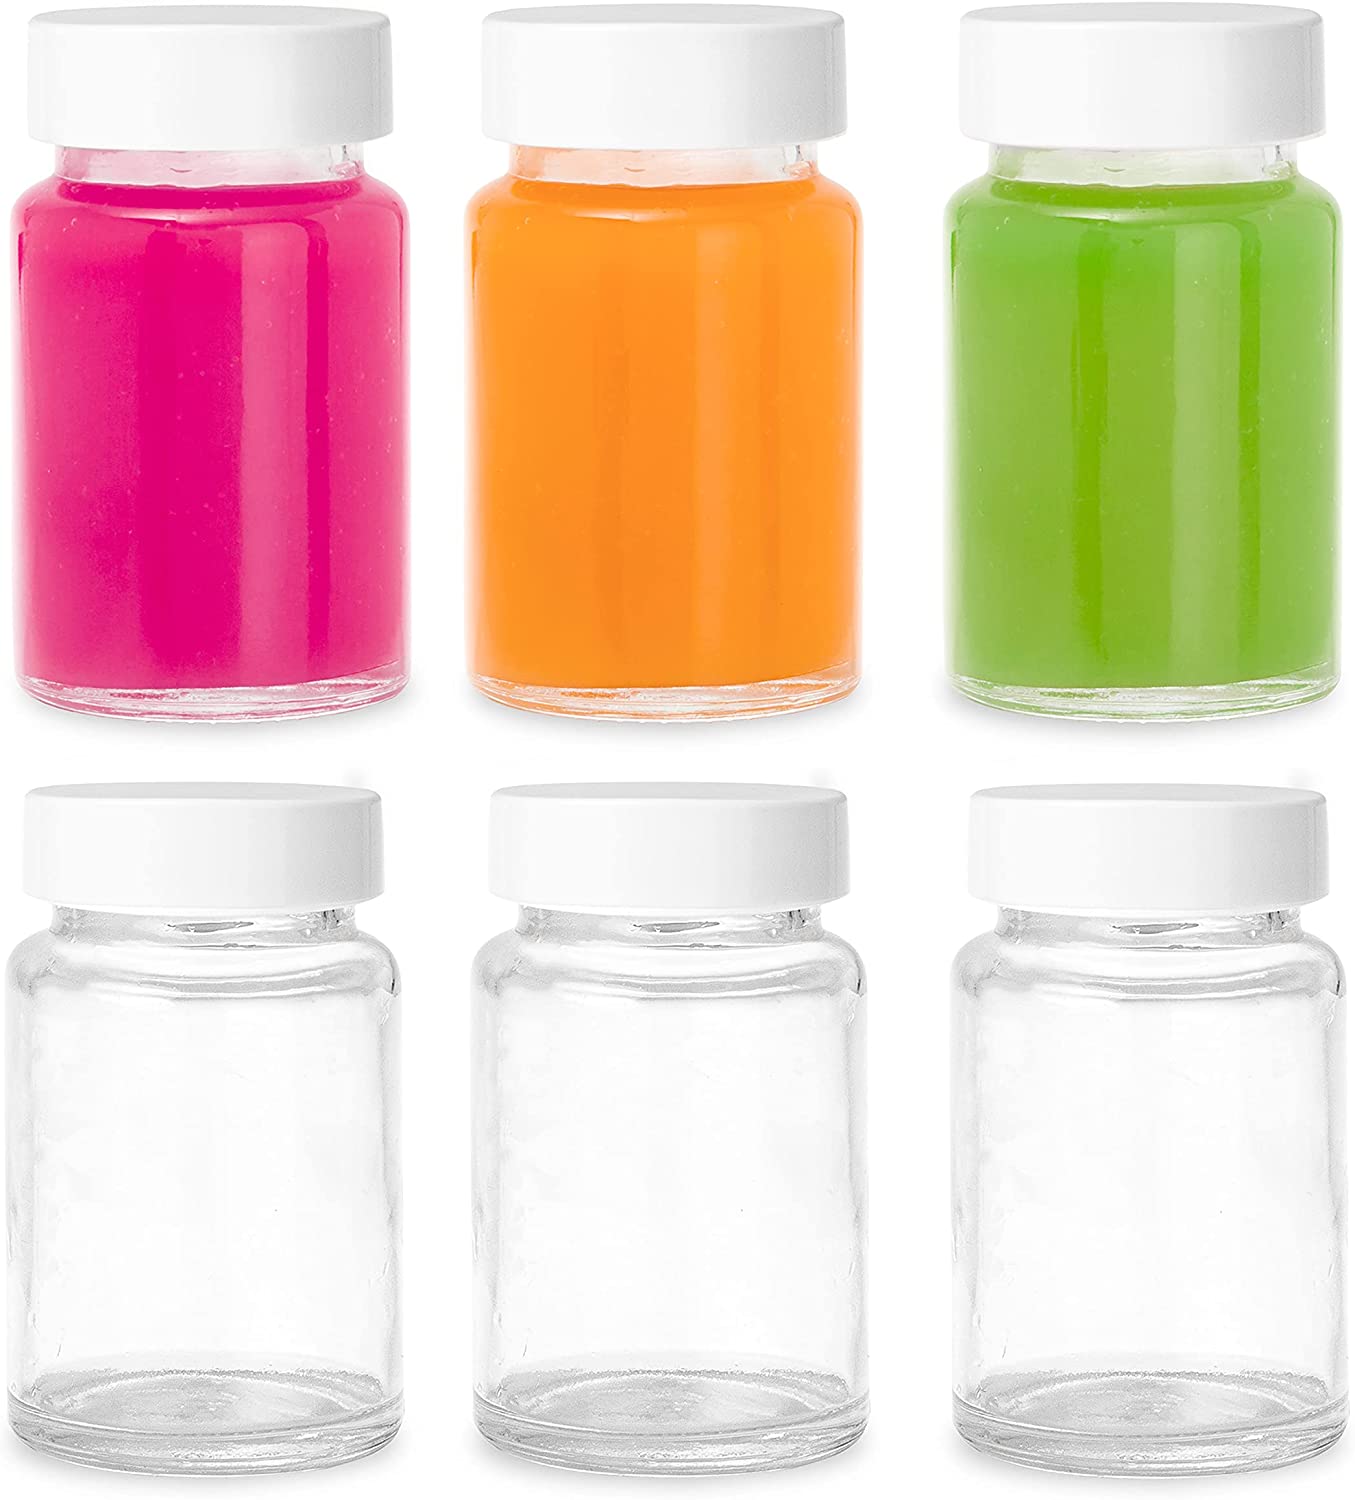 Crutello Juice Shot Bottle - 6 Pack Glass 2 oz Small Clear Glass Beverage Bottle, Storage Container for Juice, Shots, Liquids, Leak Proof